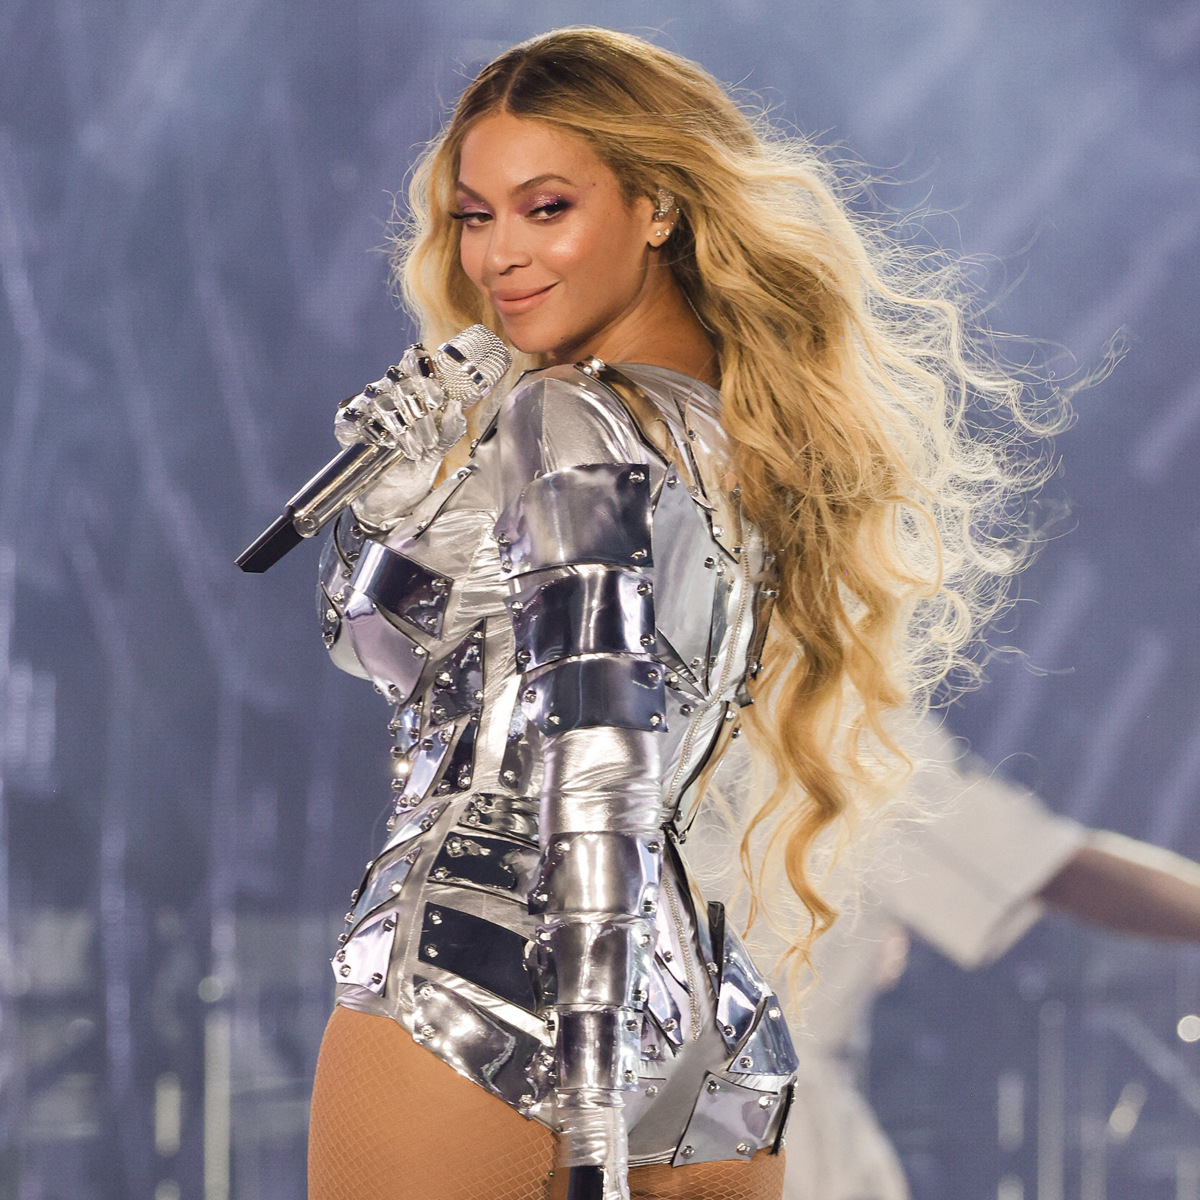 Beyoncé News, Pictures, and Videos - E! Online